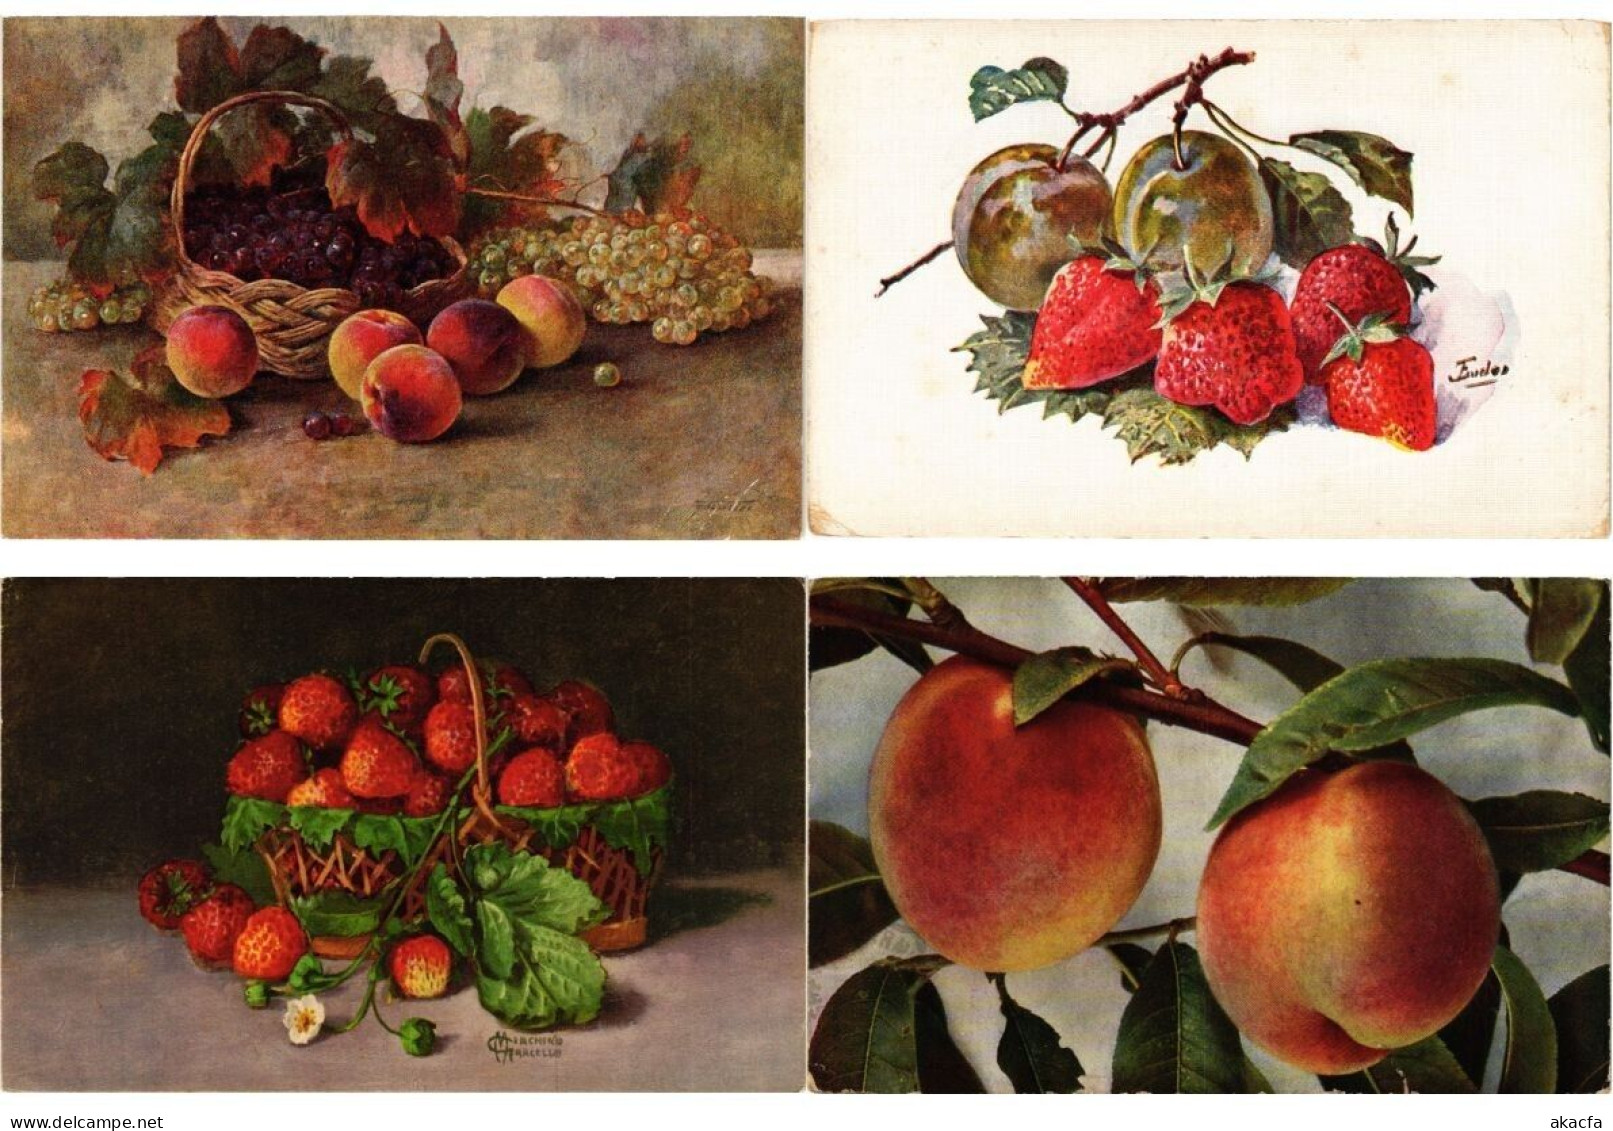 FRUIT, FRUITS, 67 Vintage Postcards pre-1940 (L6218)